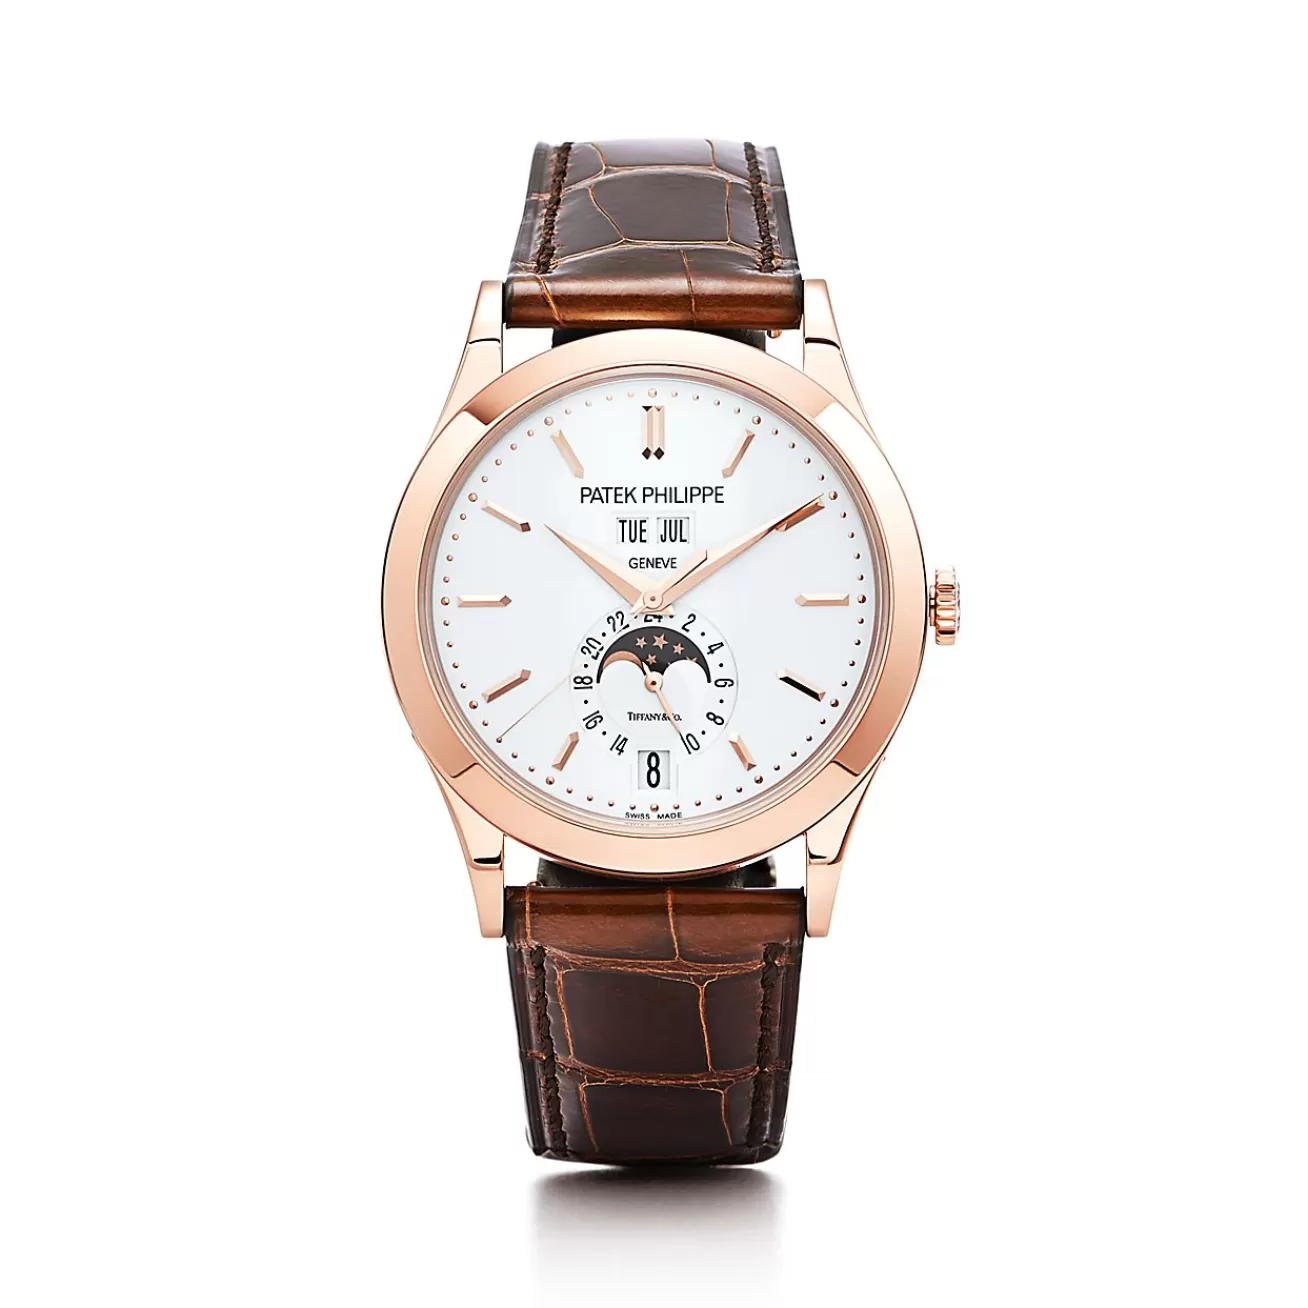 Tiffany & Co. Patek Philippe Complications men’s watch in 18k rose gold, self-winding. | ^ Patek Philippe